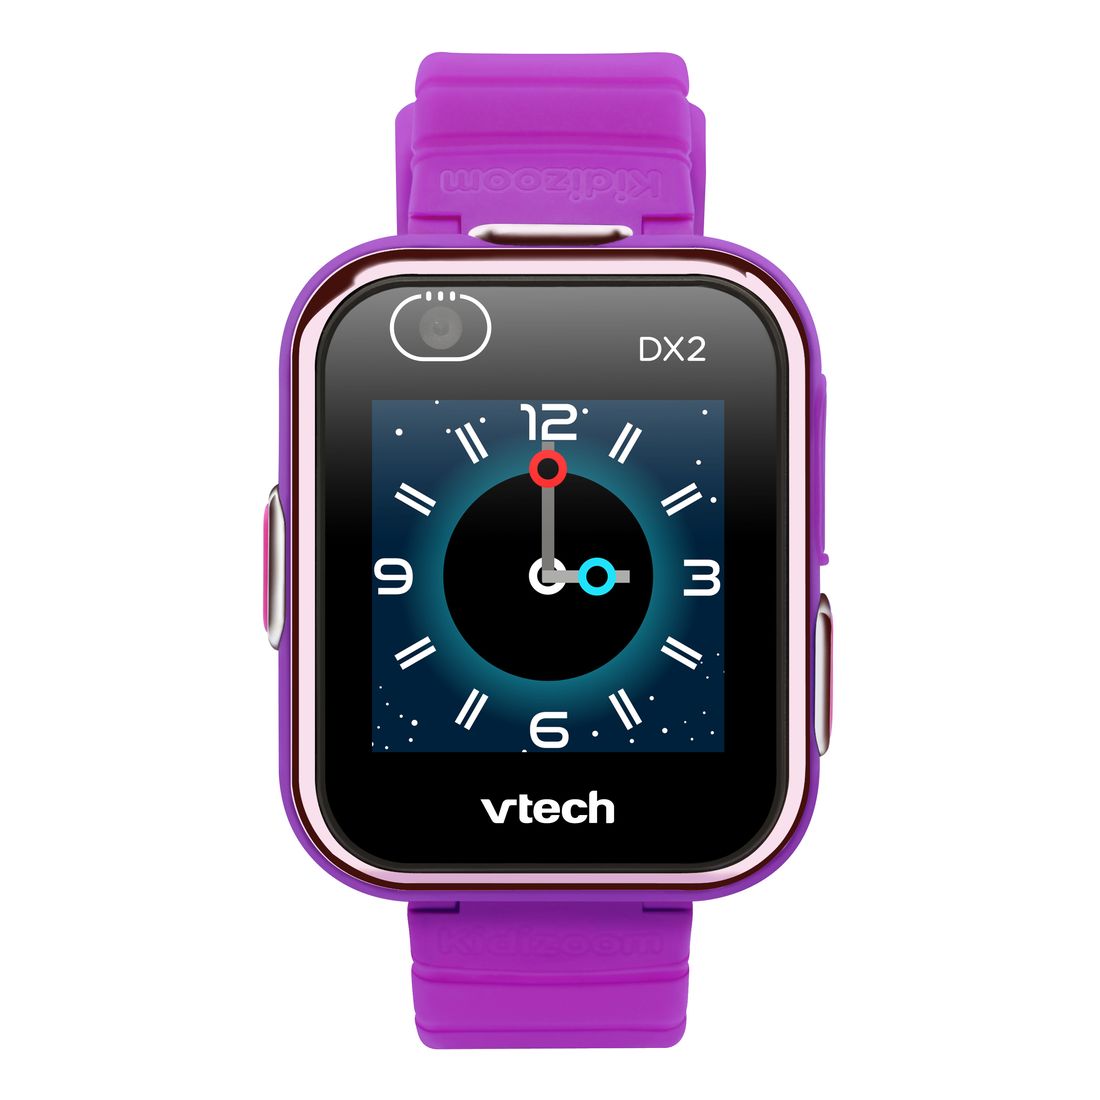 Vtech Kidizoom DX2 Kid's Smartwatch - Purple